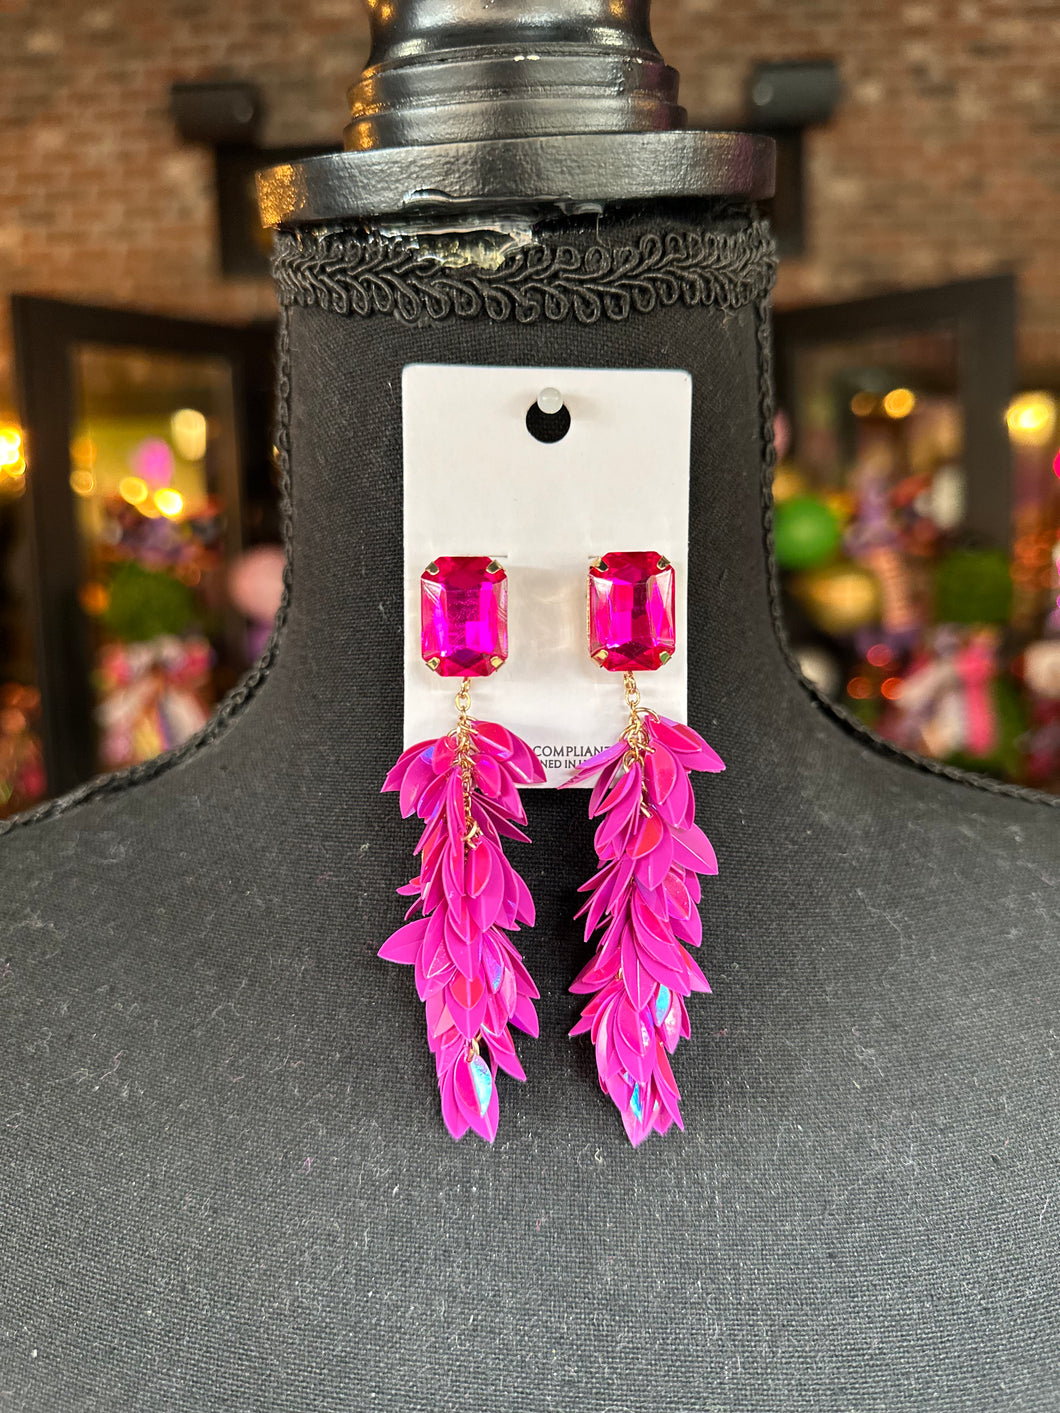 Jeweled Fuchsia earrings w/ dangling petals